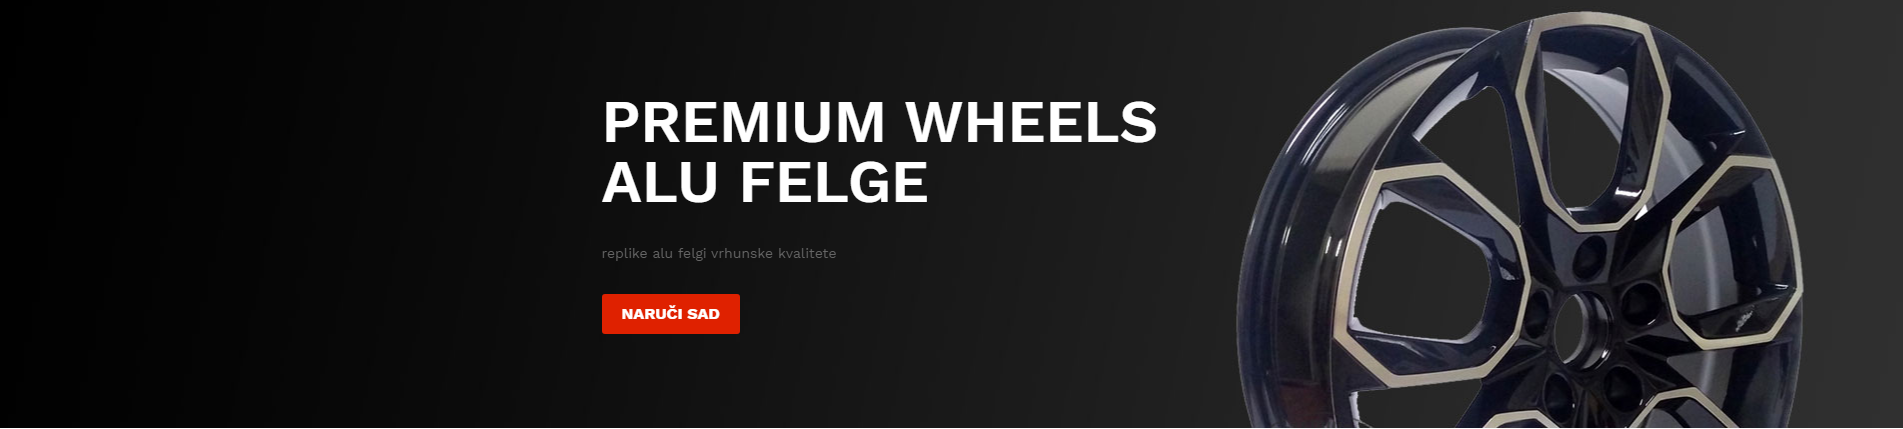 Naslovnica - Premium Wheels